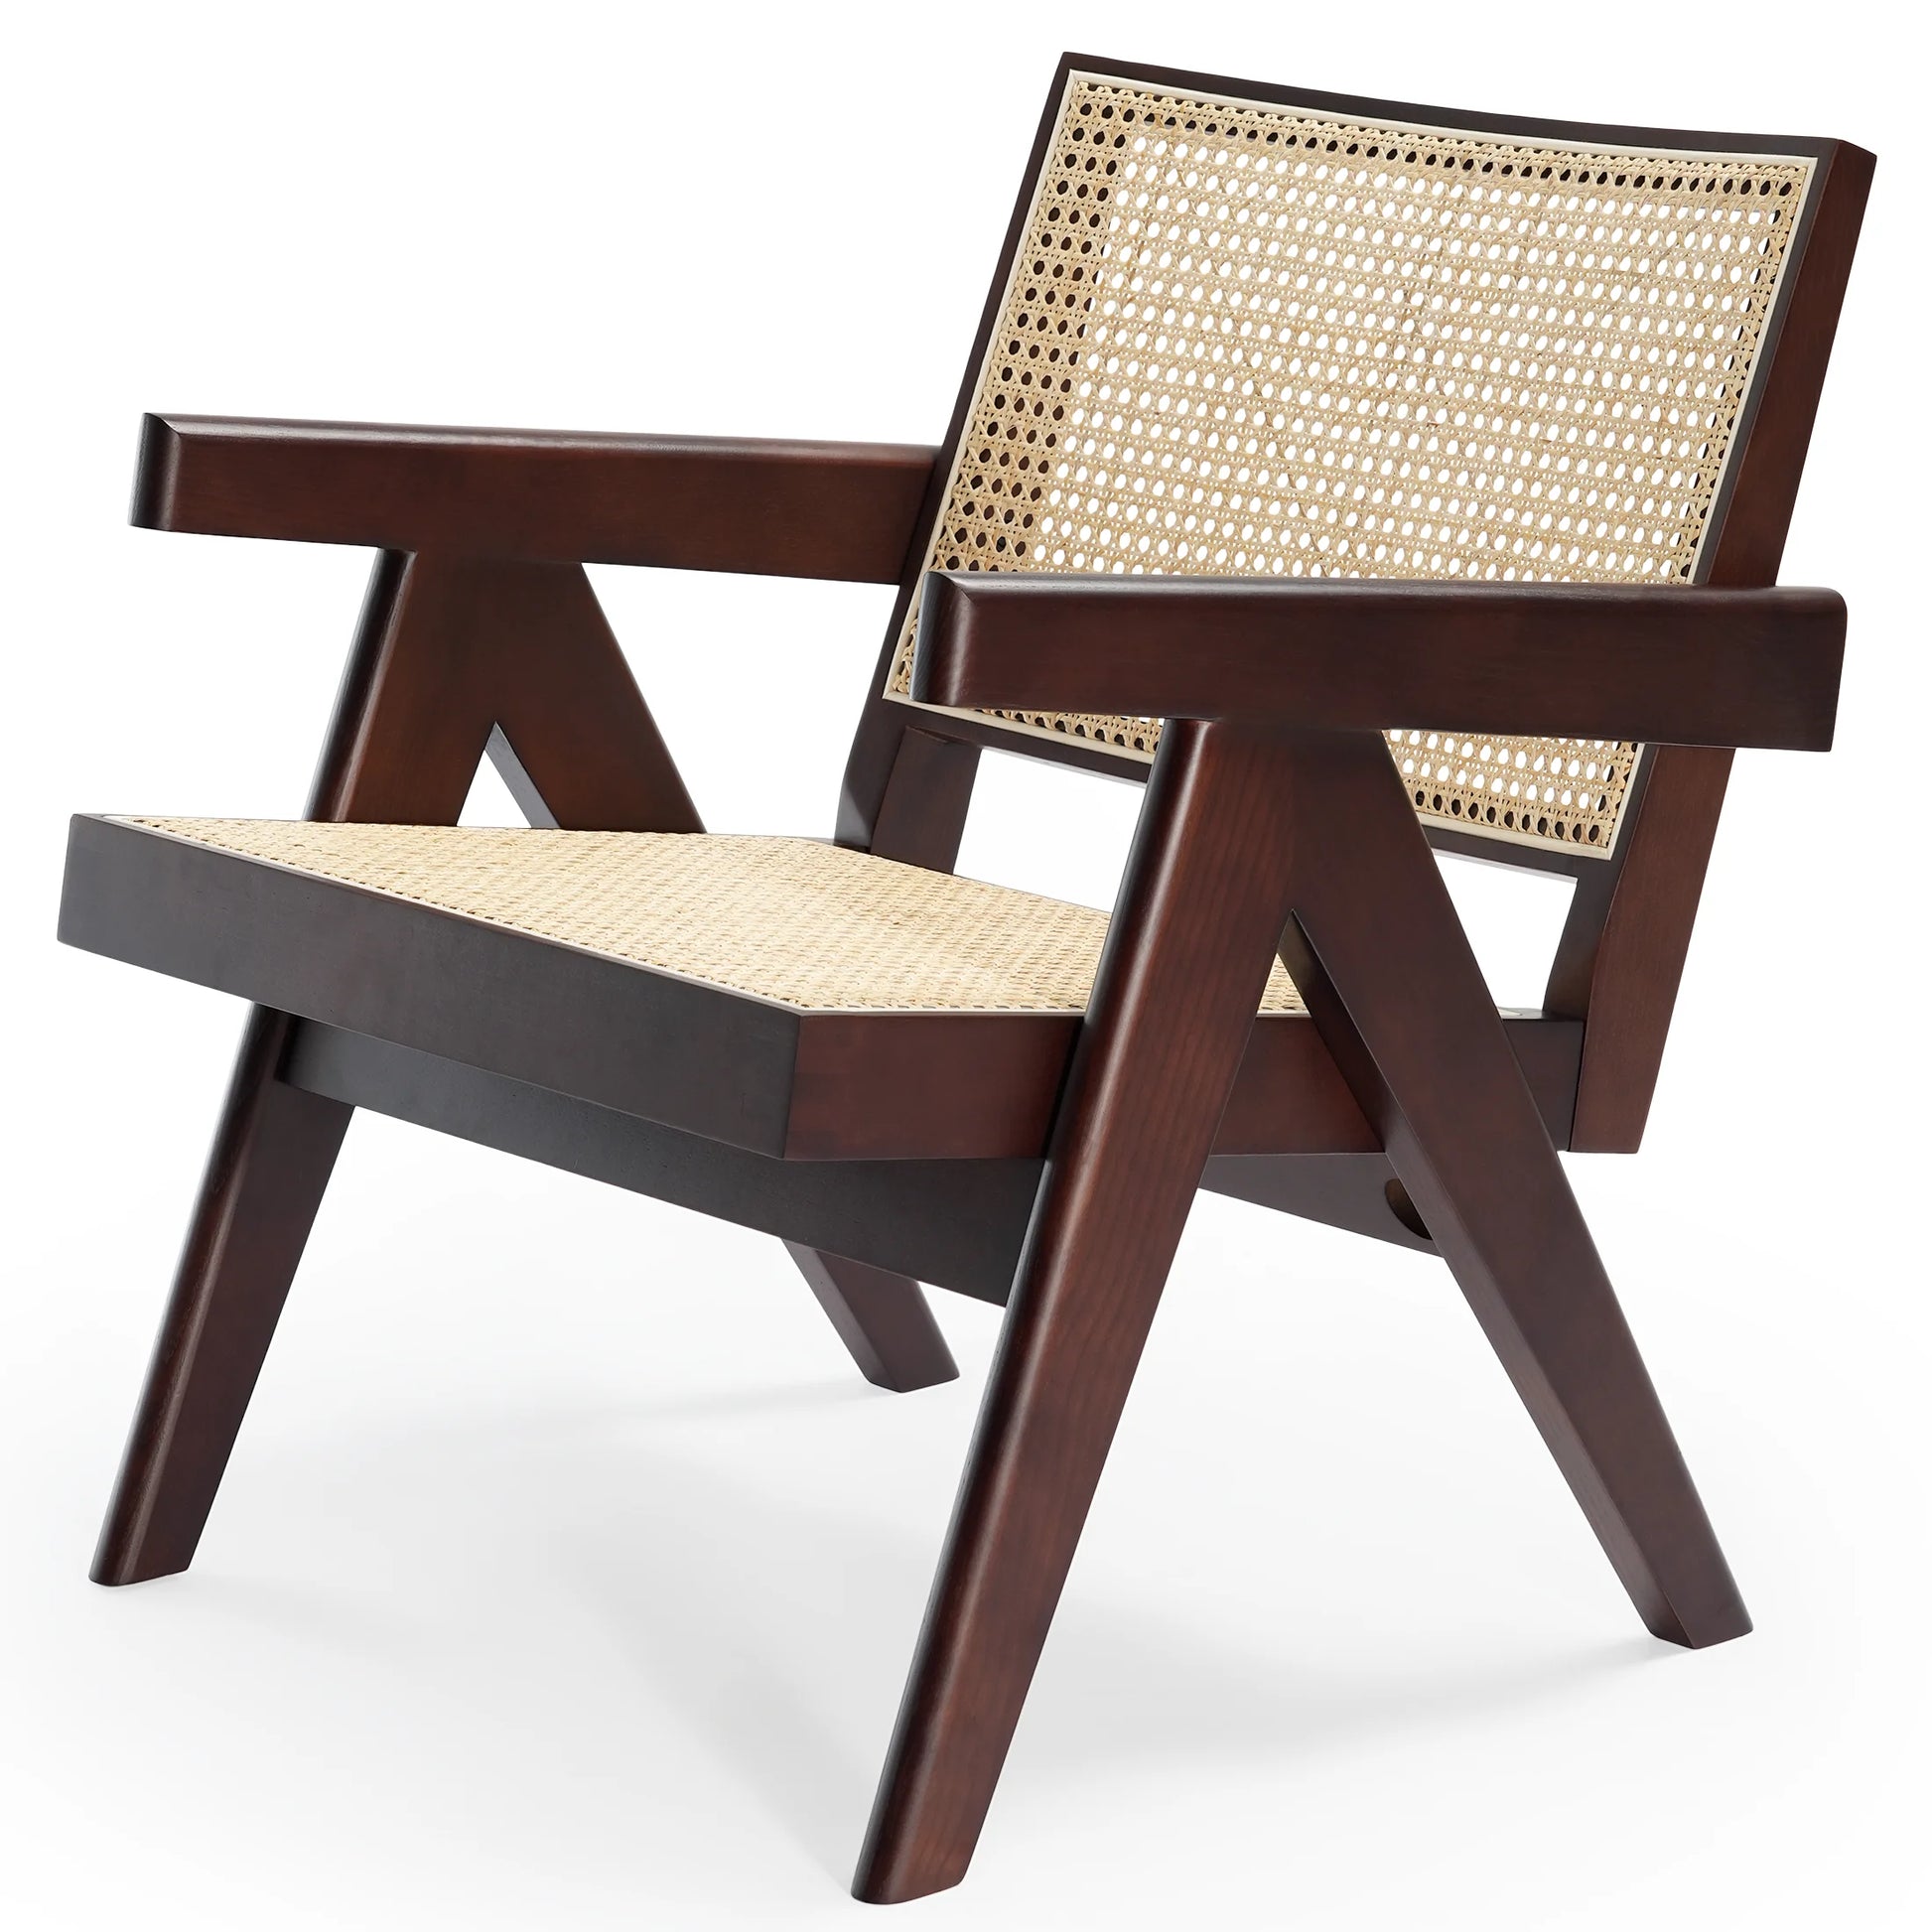 CORX Designs - Chandigarh Rattan Leisure Chair - Review